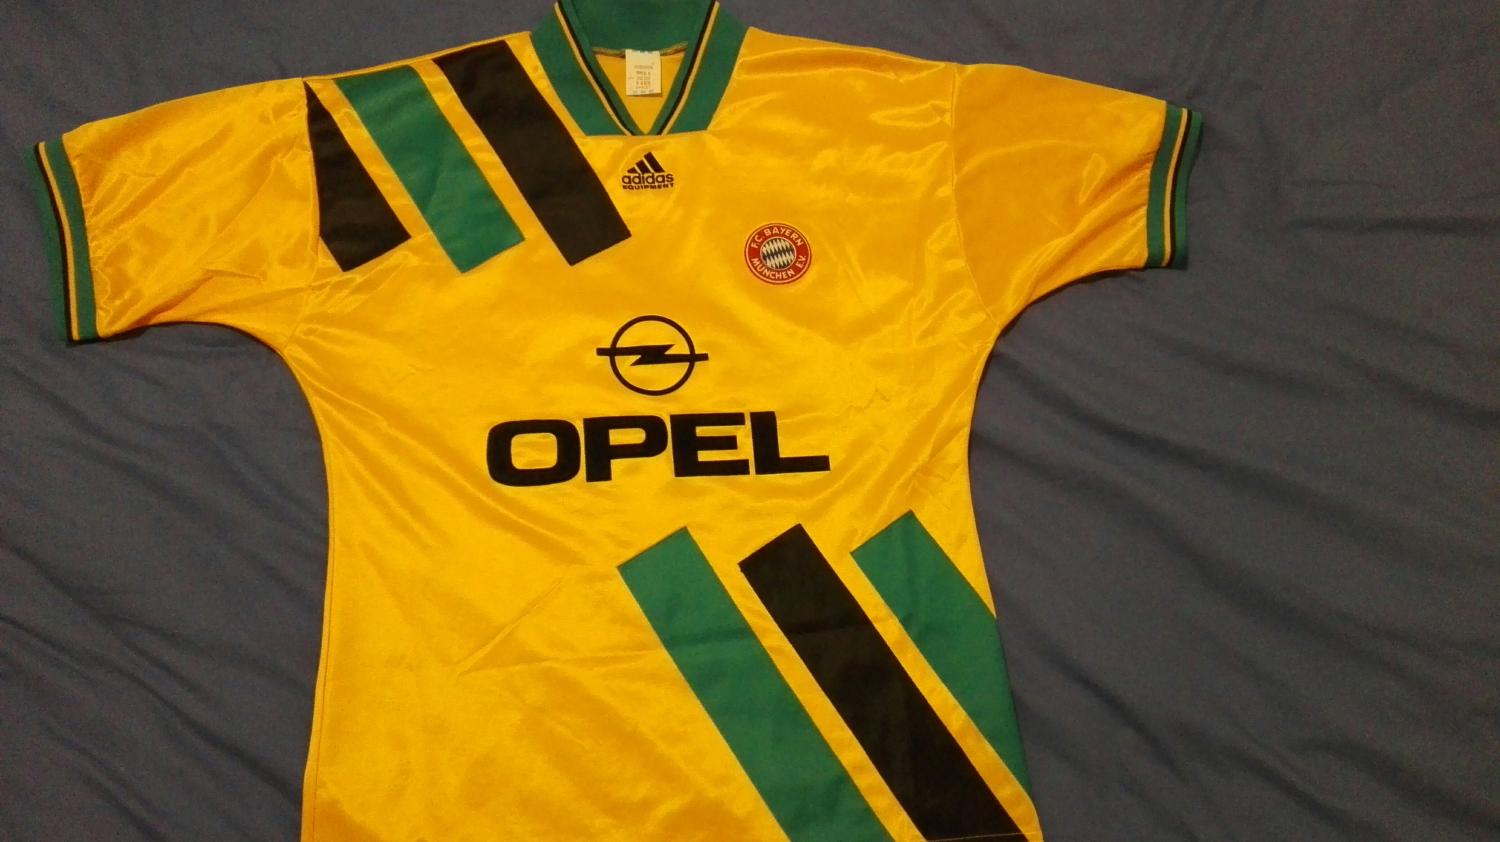 Bayern Munich Away football shirt 1993 - 1995. Sponsored by Opel